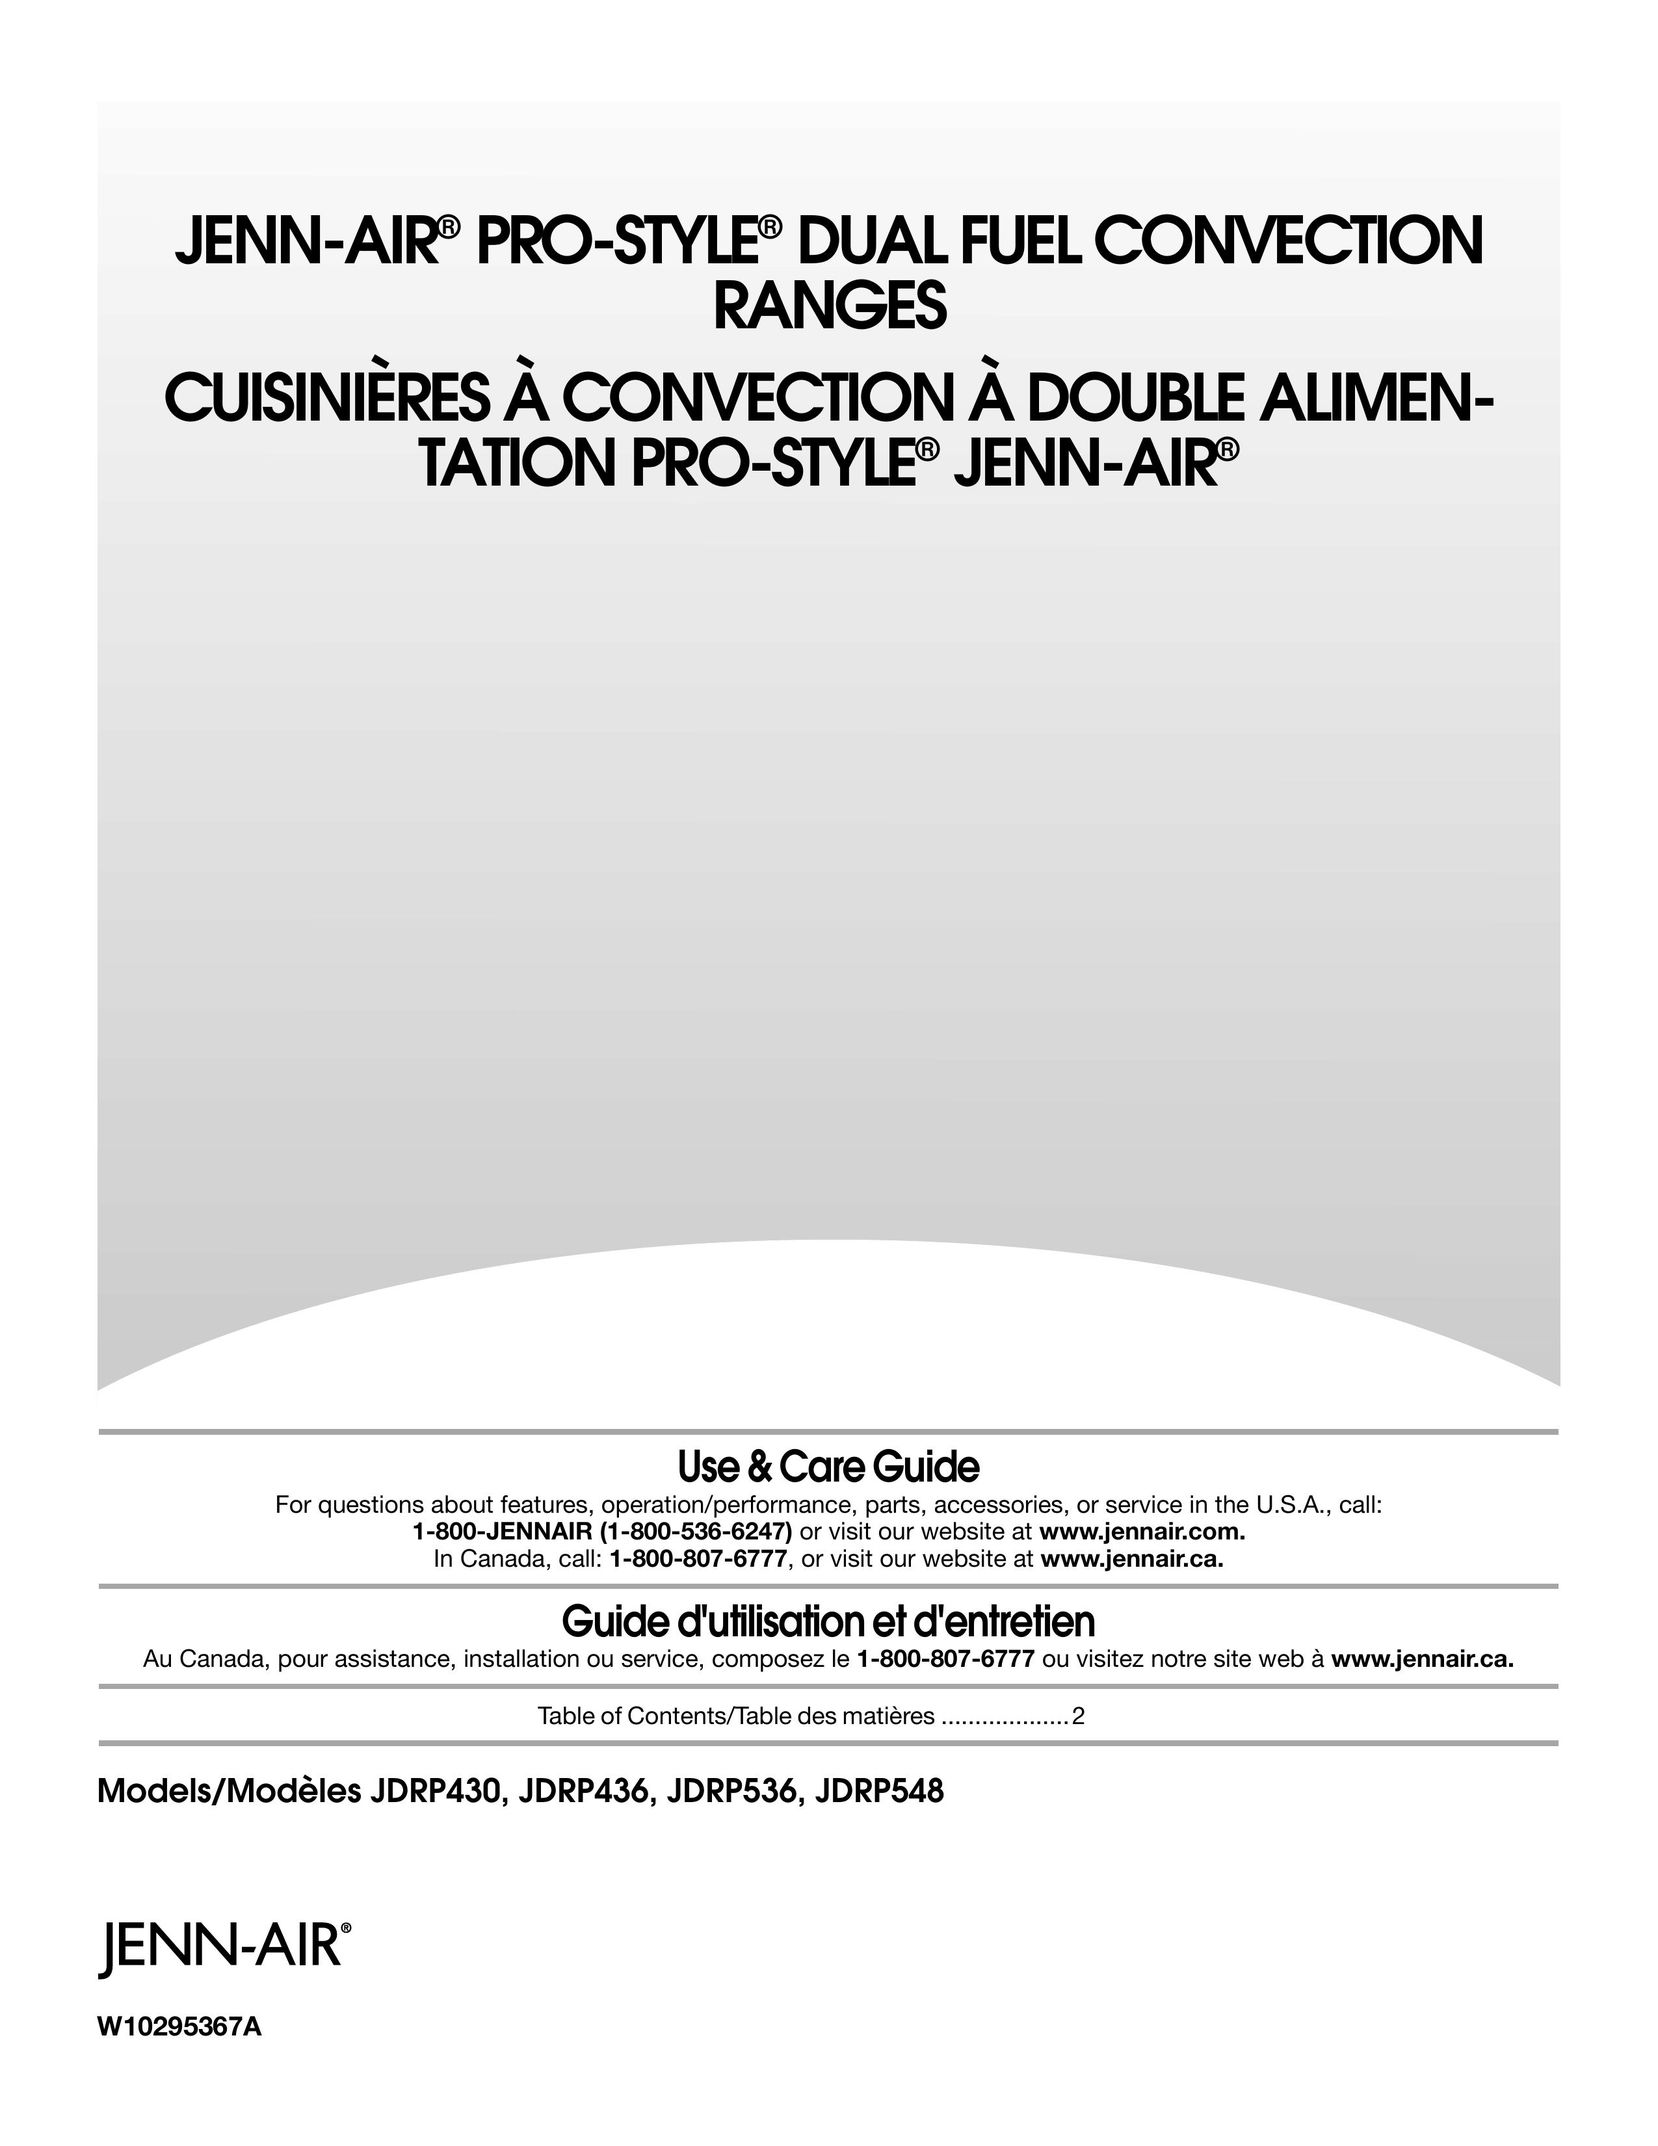 Jenn-Air JDRP548 Range User Manual